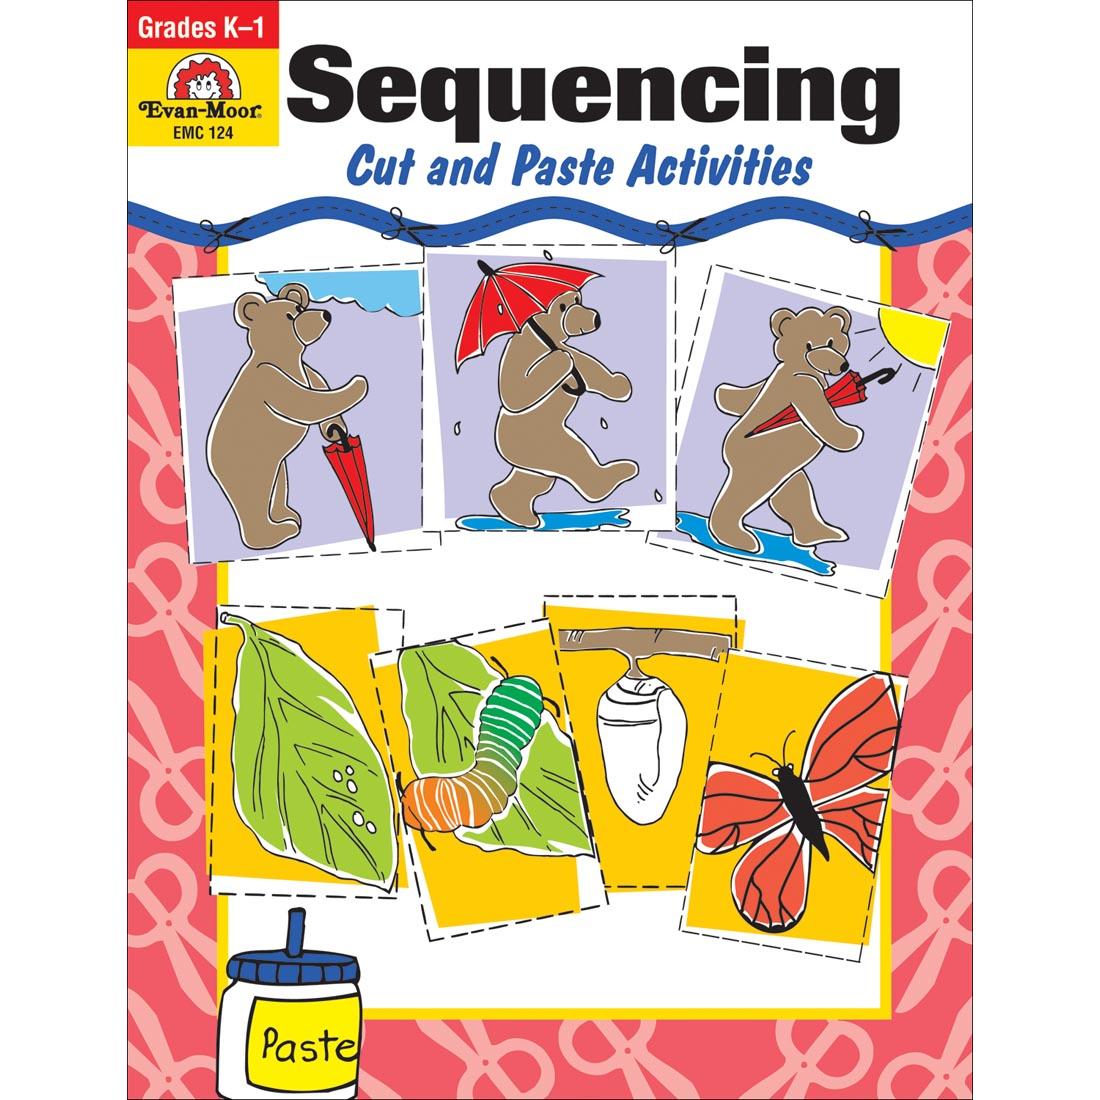 Sequencing Cut and Paste Activities by Evan-Moor